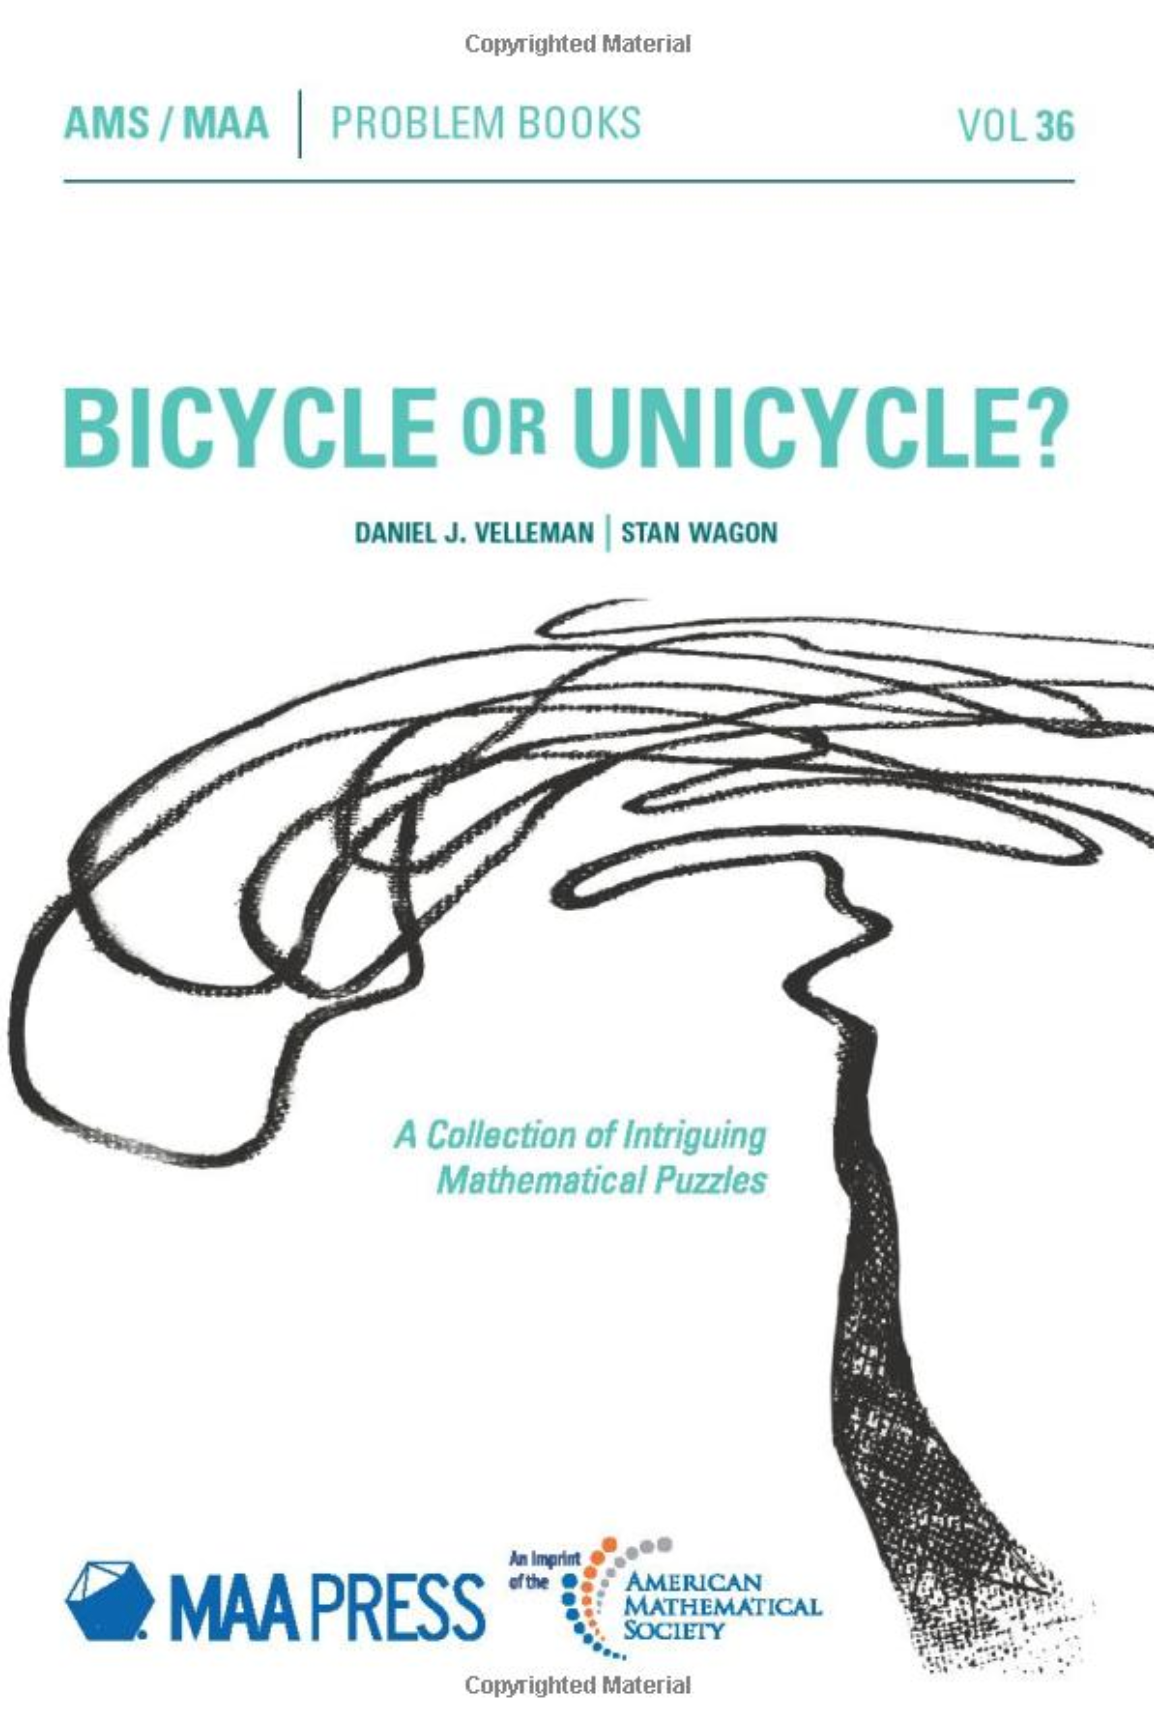 Bicycle or Unicycle?